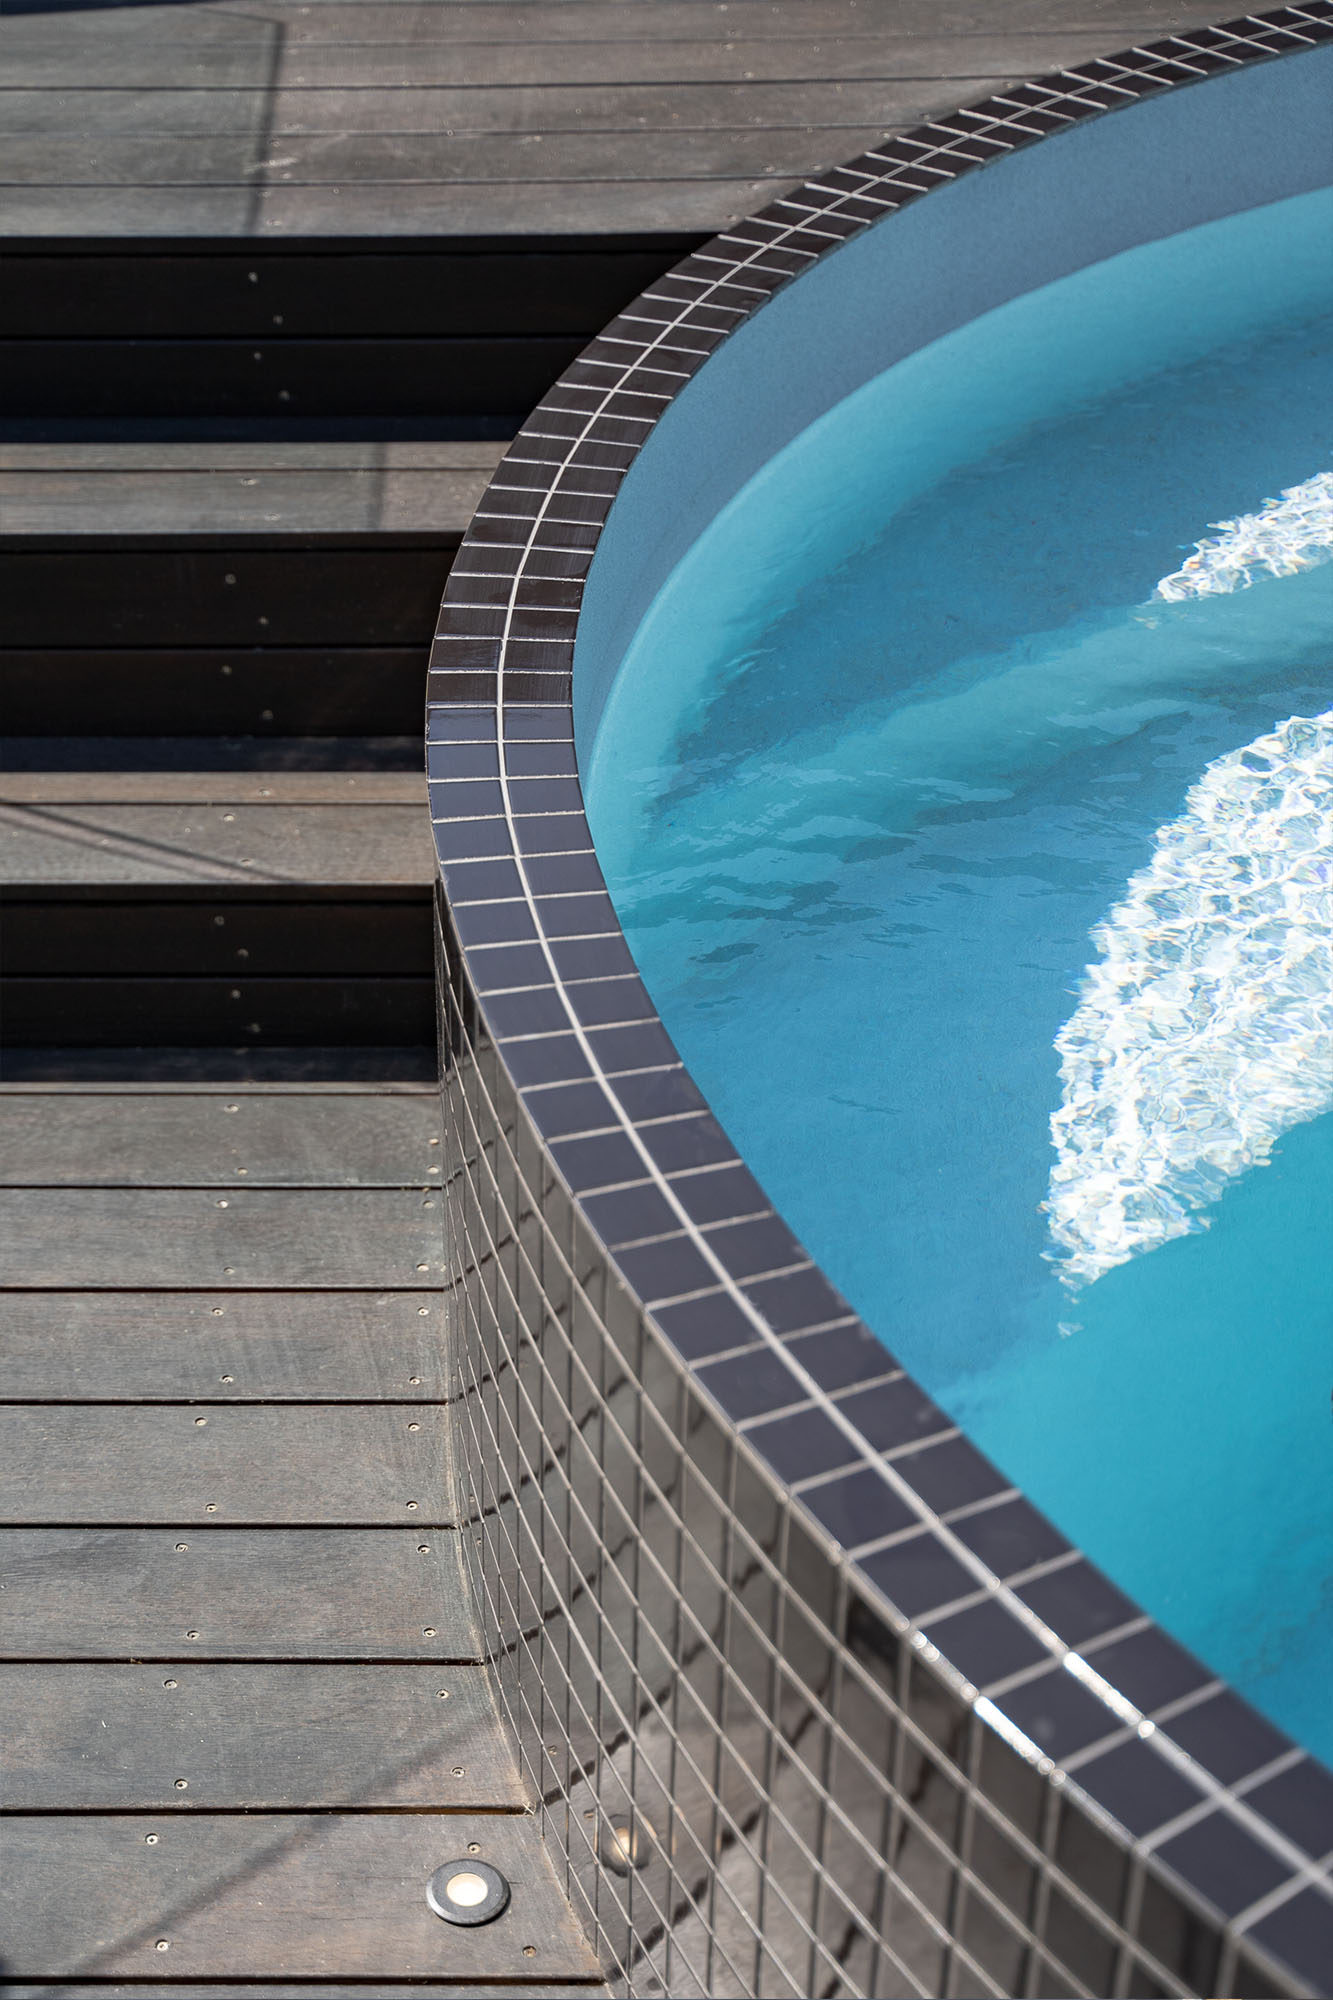 Tiled Plungie Arena 3.5m round concrete pool in Blue Lagoon